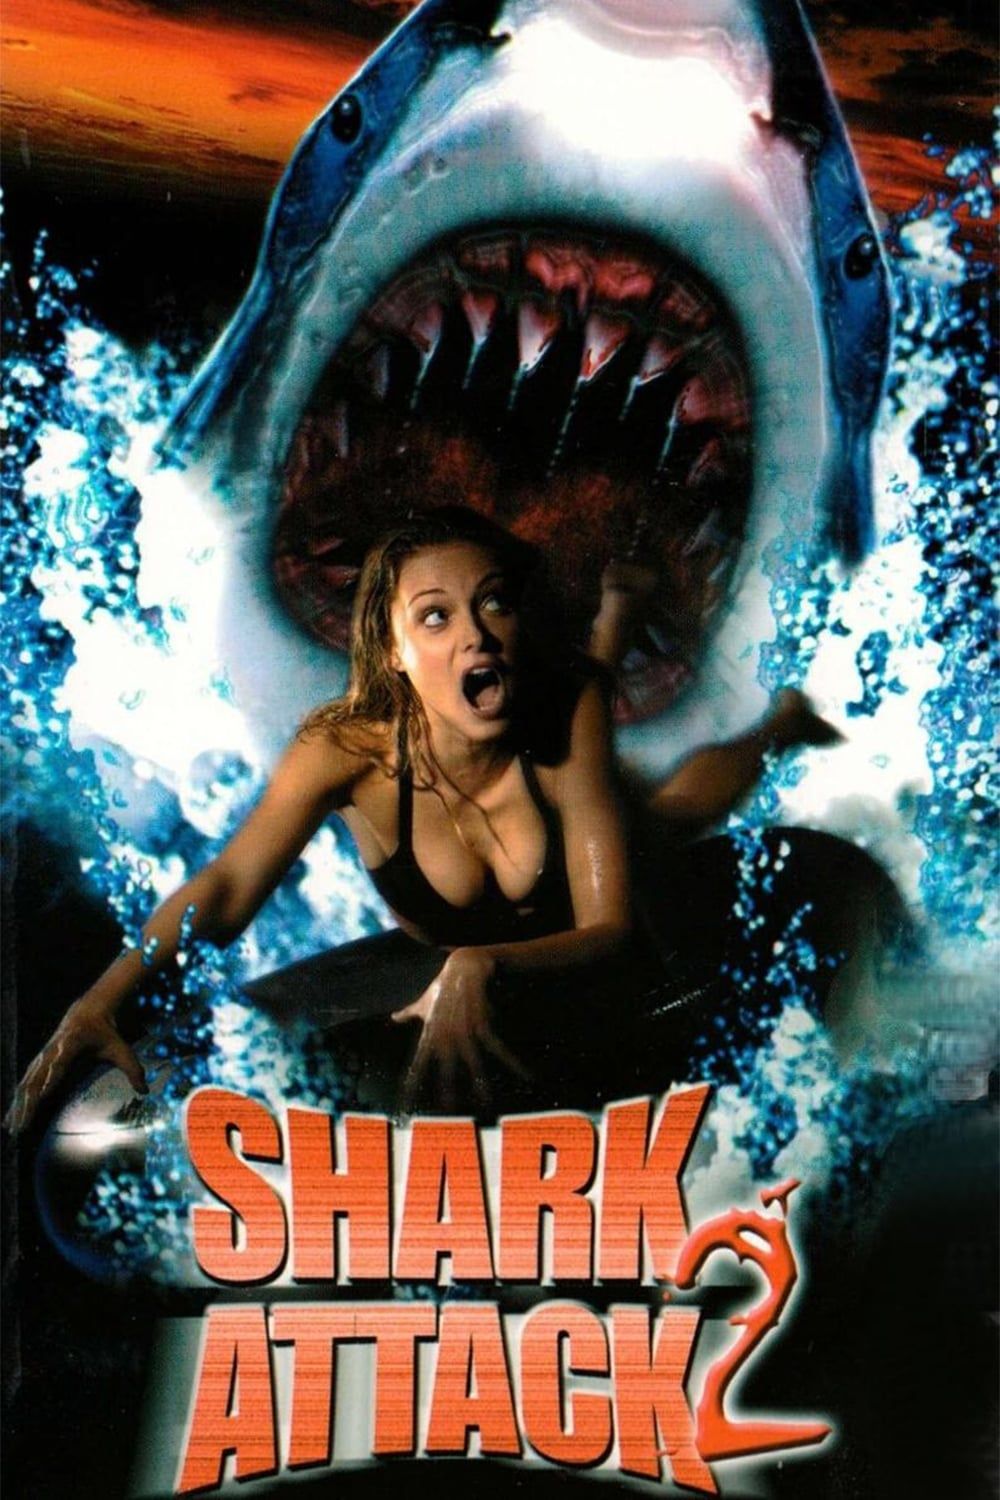 Shark Attack 2 (2002) Hindi Dubbed HDRip download full movie